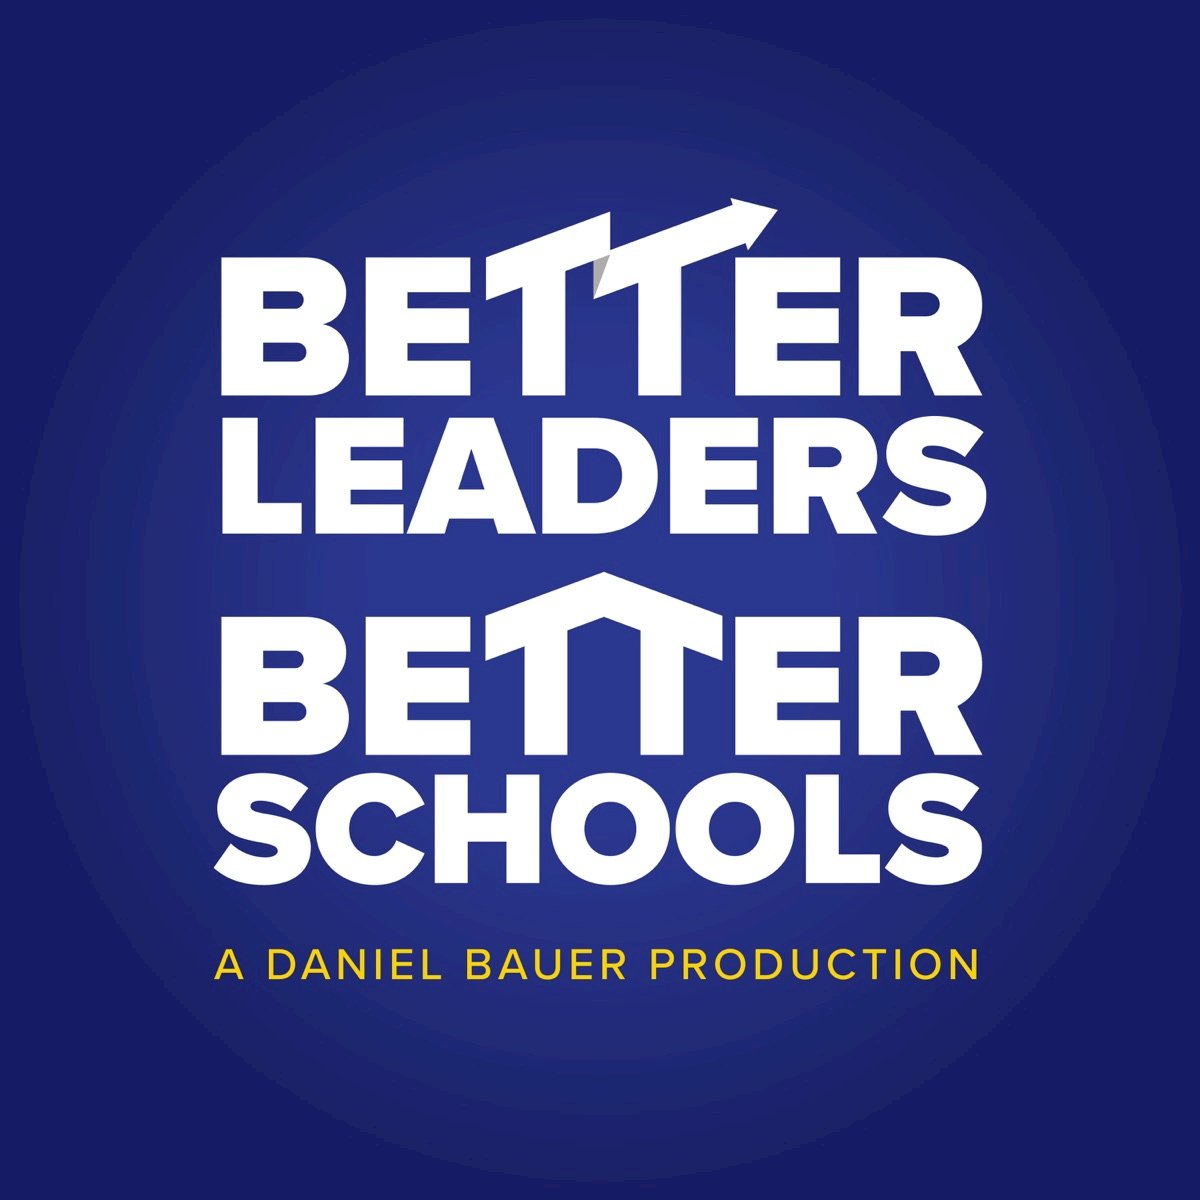  Better Leaders Better Schools Podcast